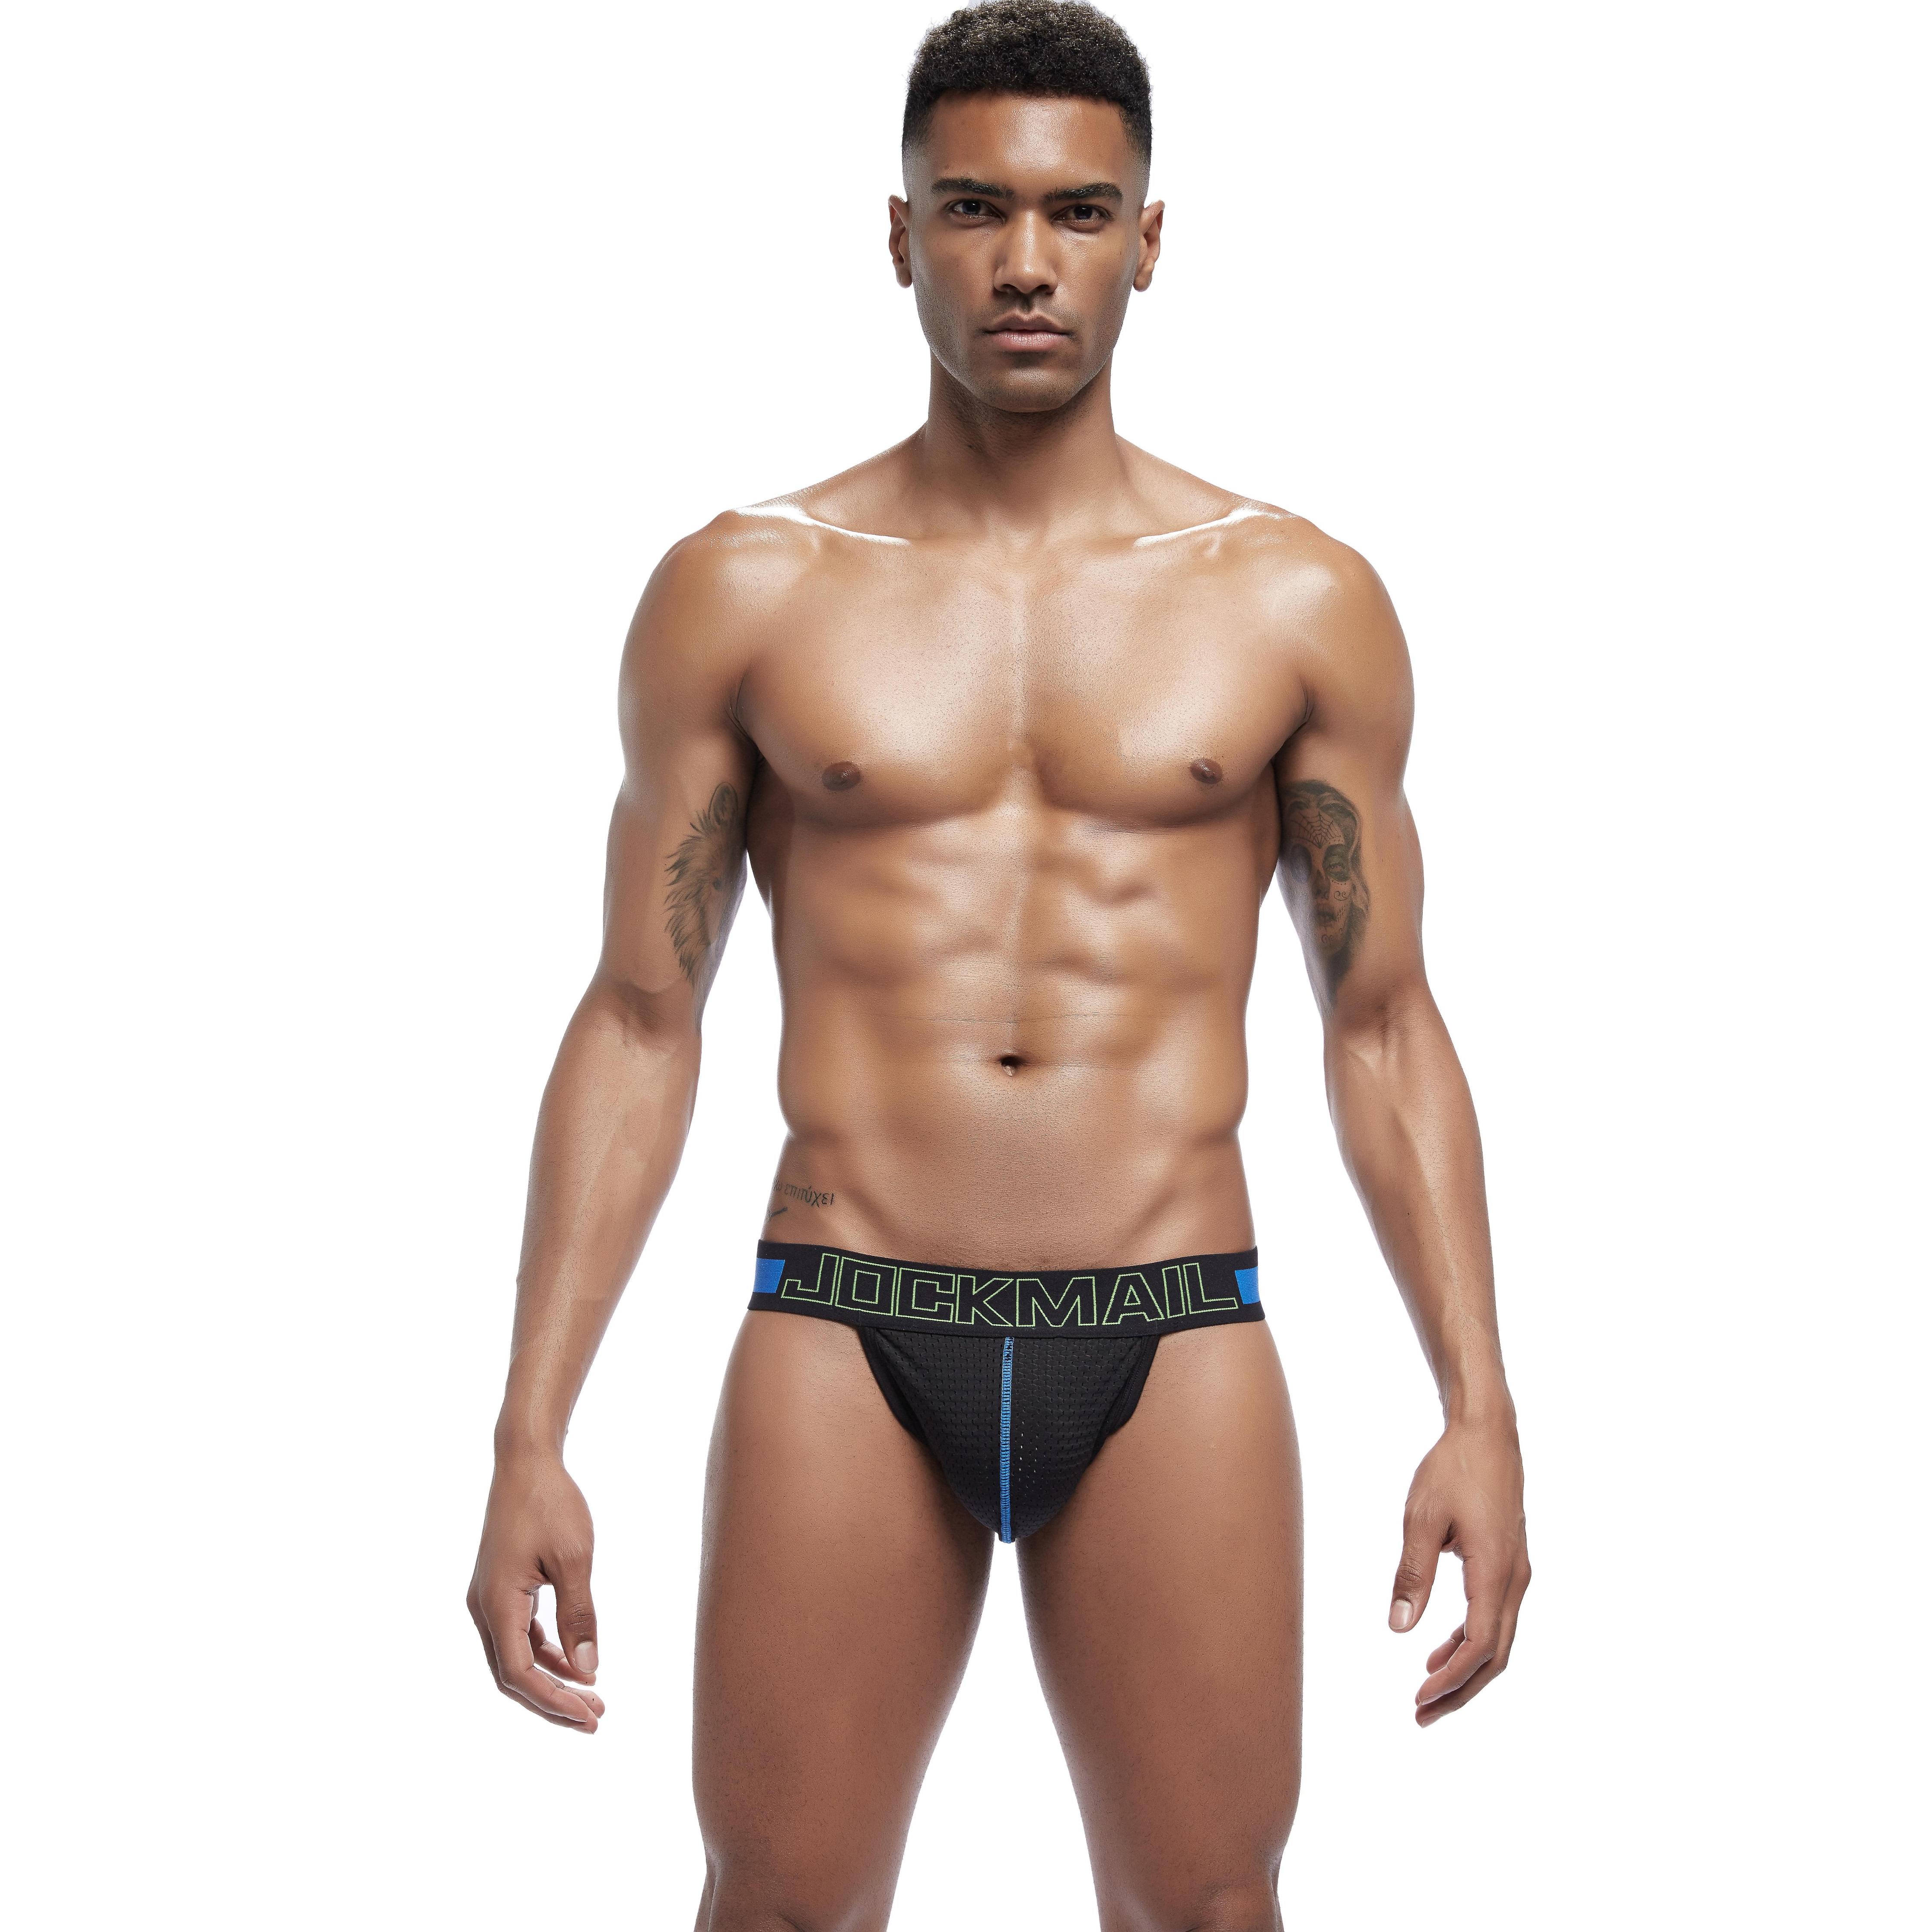 JOCKMAIL Mesh Athletic Supporters Mens Briefs Underwear Comfort Male  Underwear for Gym Sport (as1, alpha, m, regular, regular, Black) at   Men's Clothing store